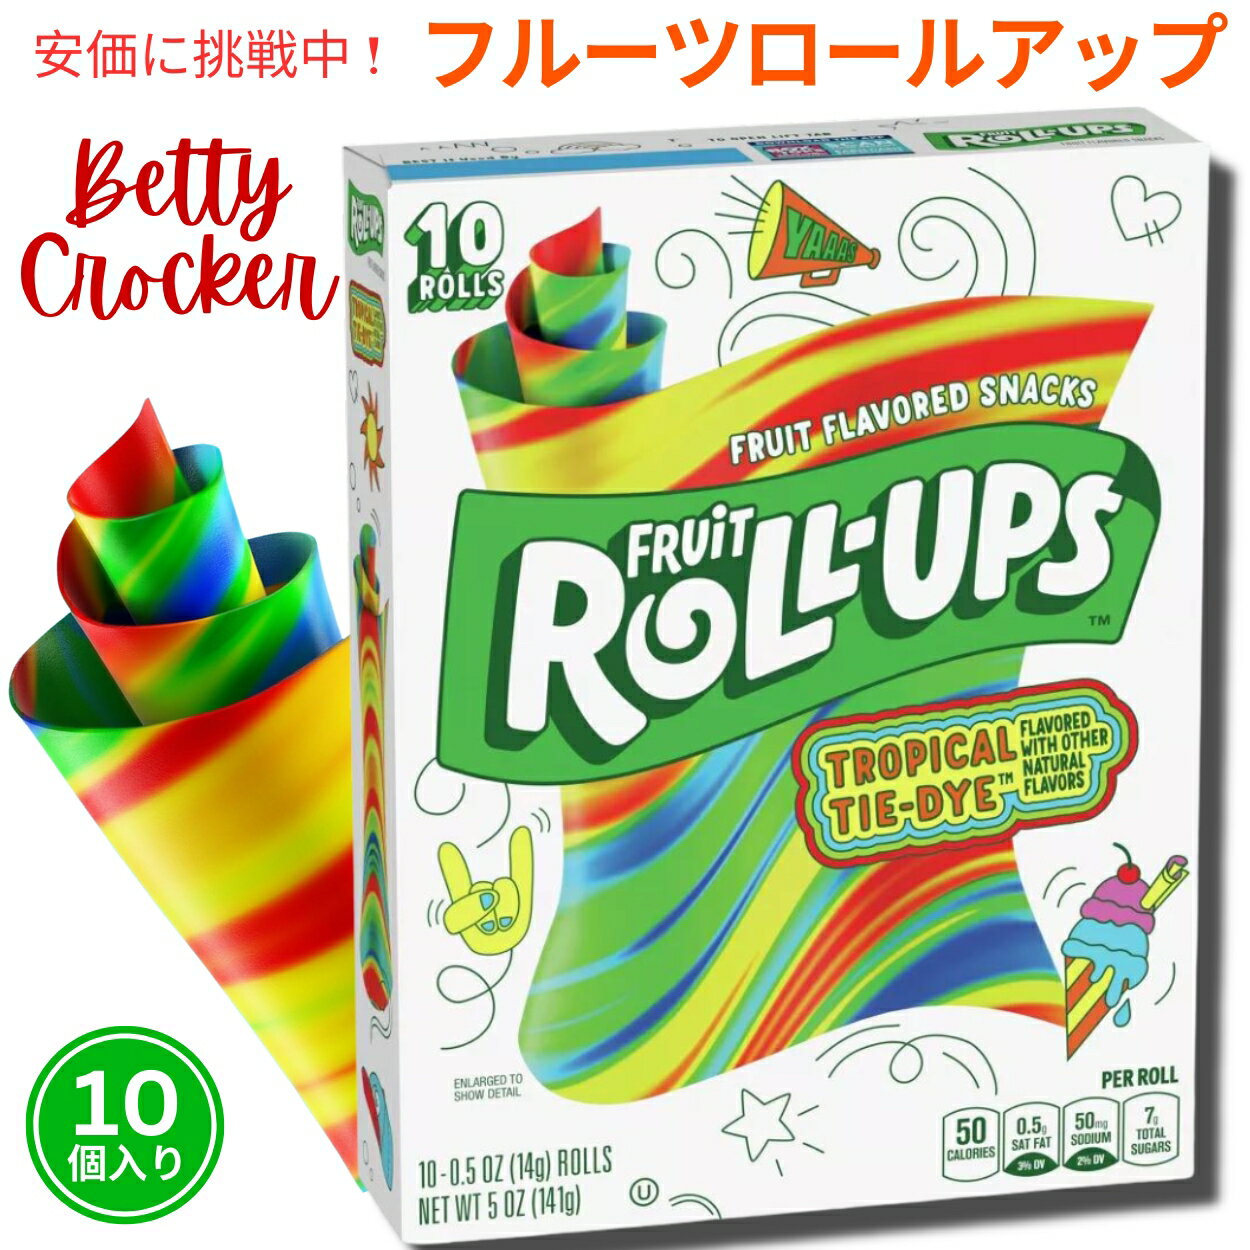 Betty Crocker ベティクロッカー フルーツ ロールアップ [トロピカルタイダイ] Fruit Roll Ups Tropical Tie-Dye 10個入り アメリカンスナック